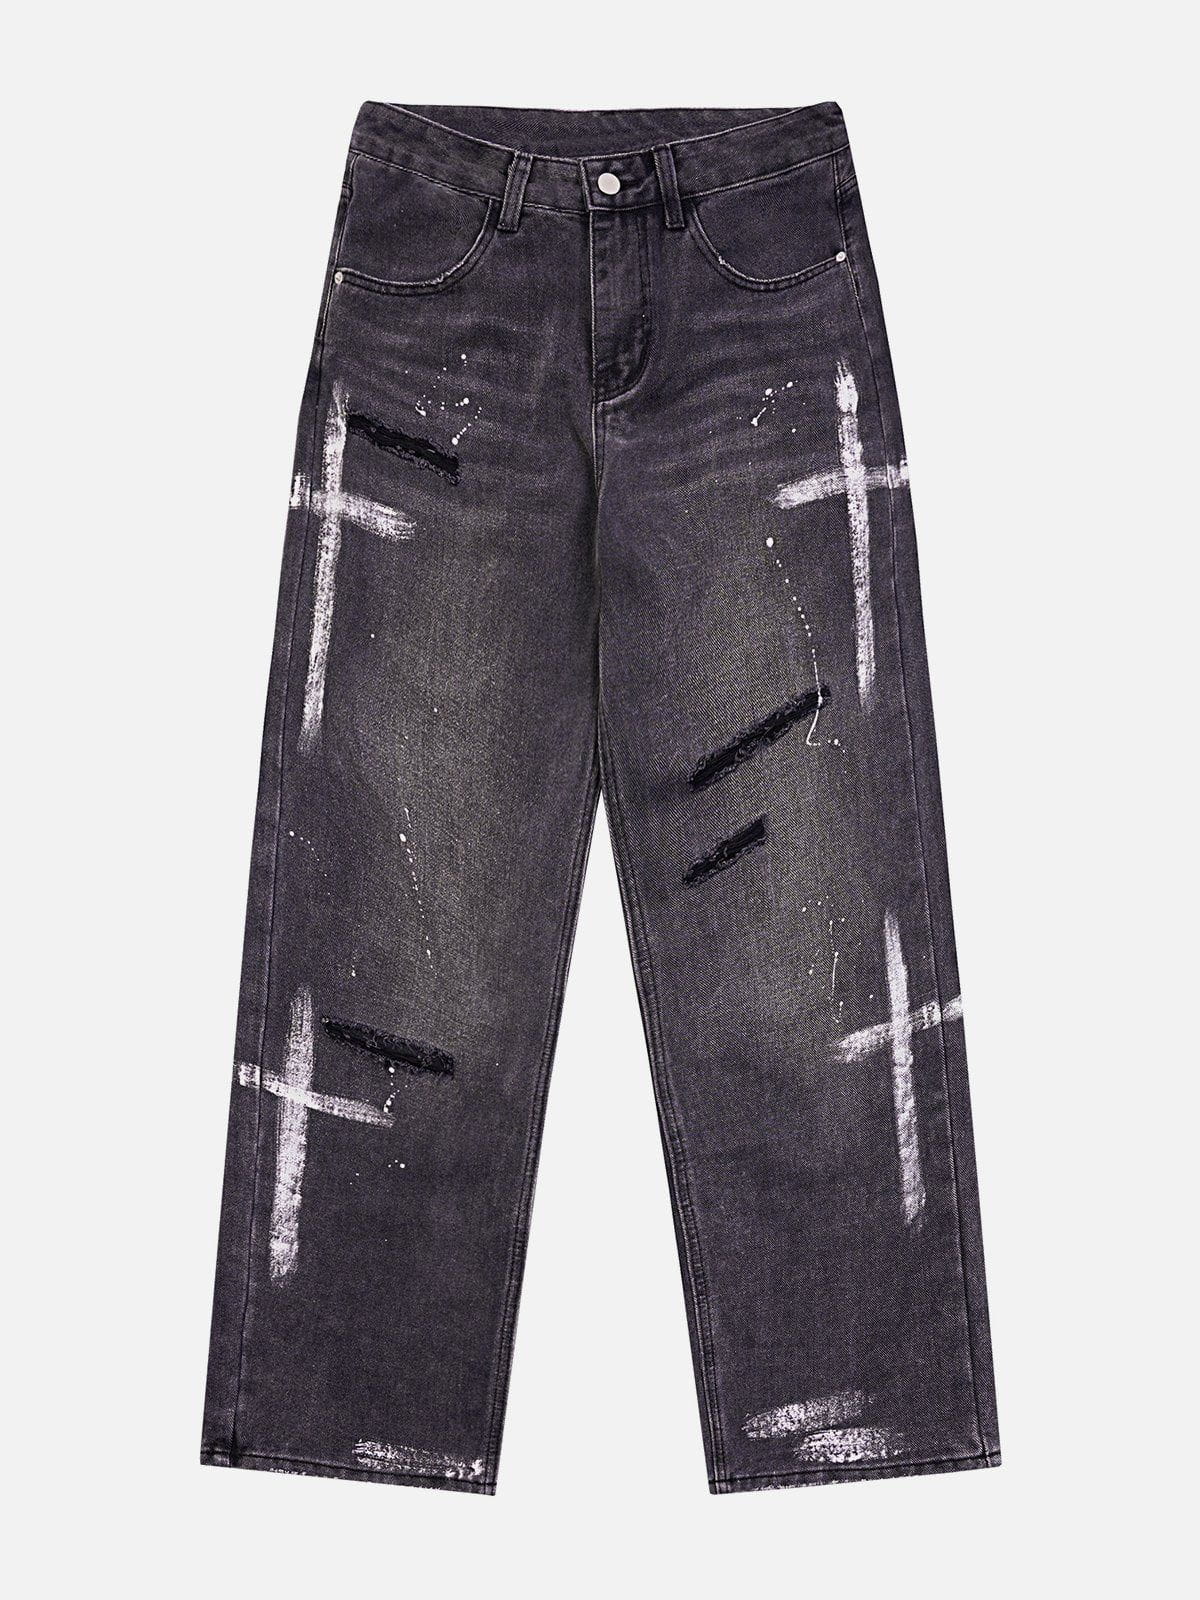 Majesda® - Hand Painted Cross Hole Jeans outfit ideas streetwear fashion